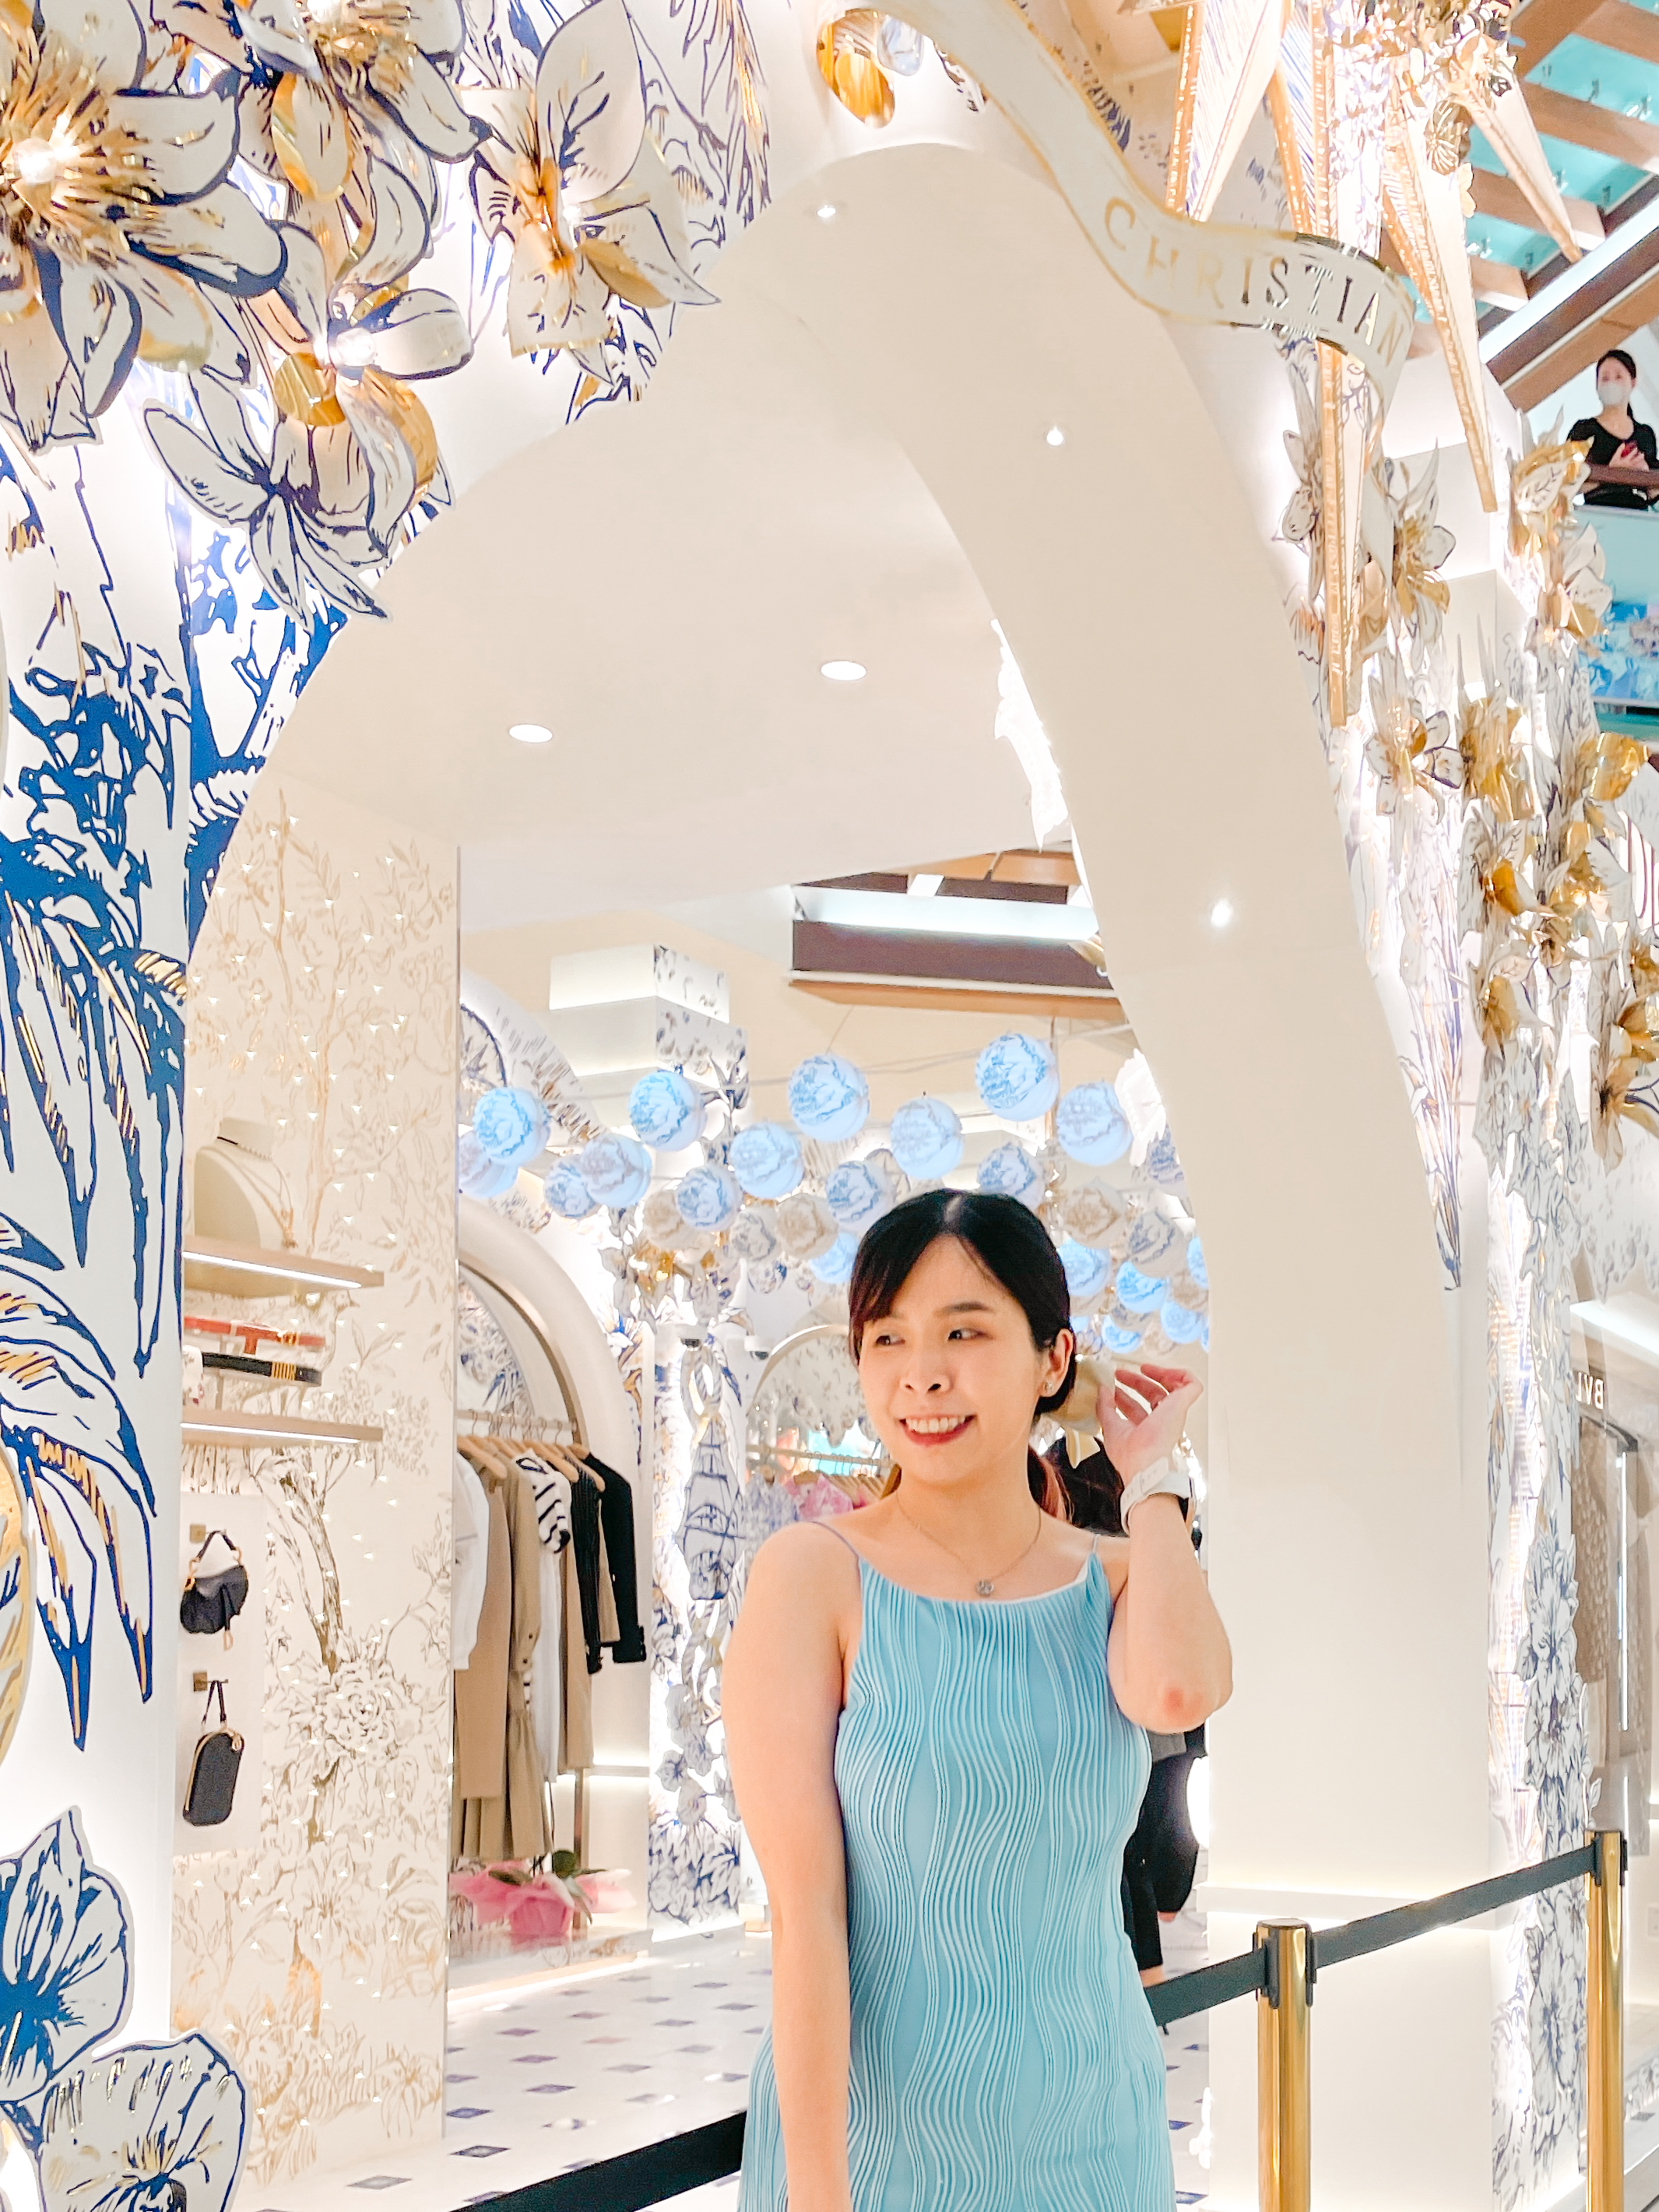 The Dior Cruise 2023 pop-up store illuminates The Gardens Mall